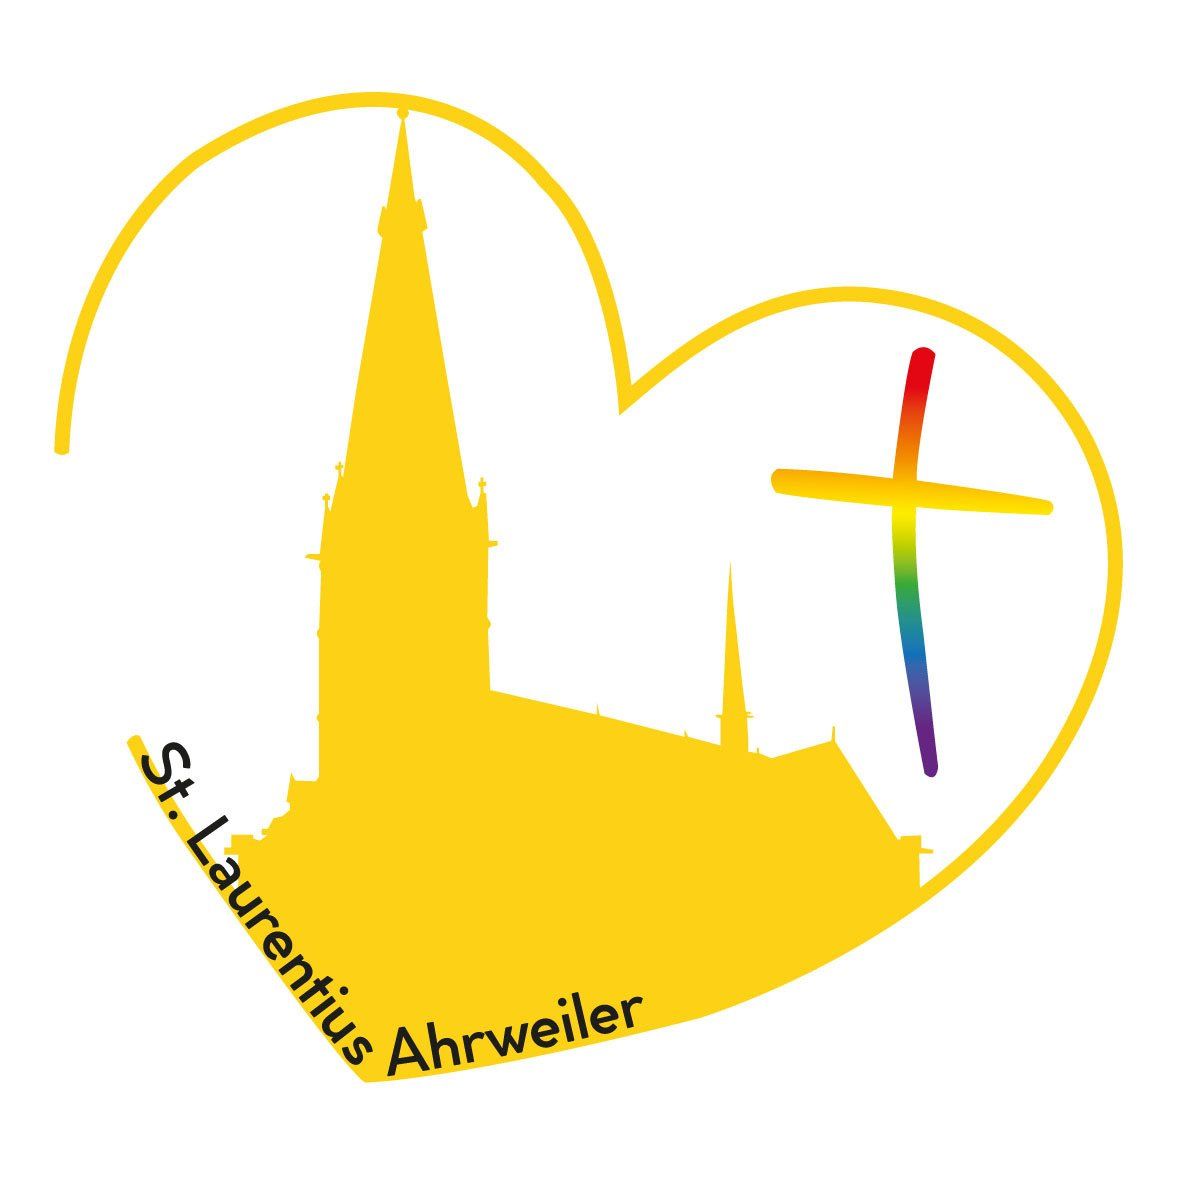 Sankt laurentius Ahrweiler